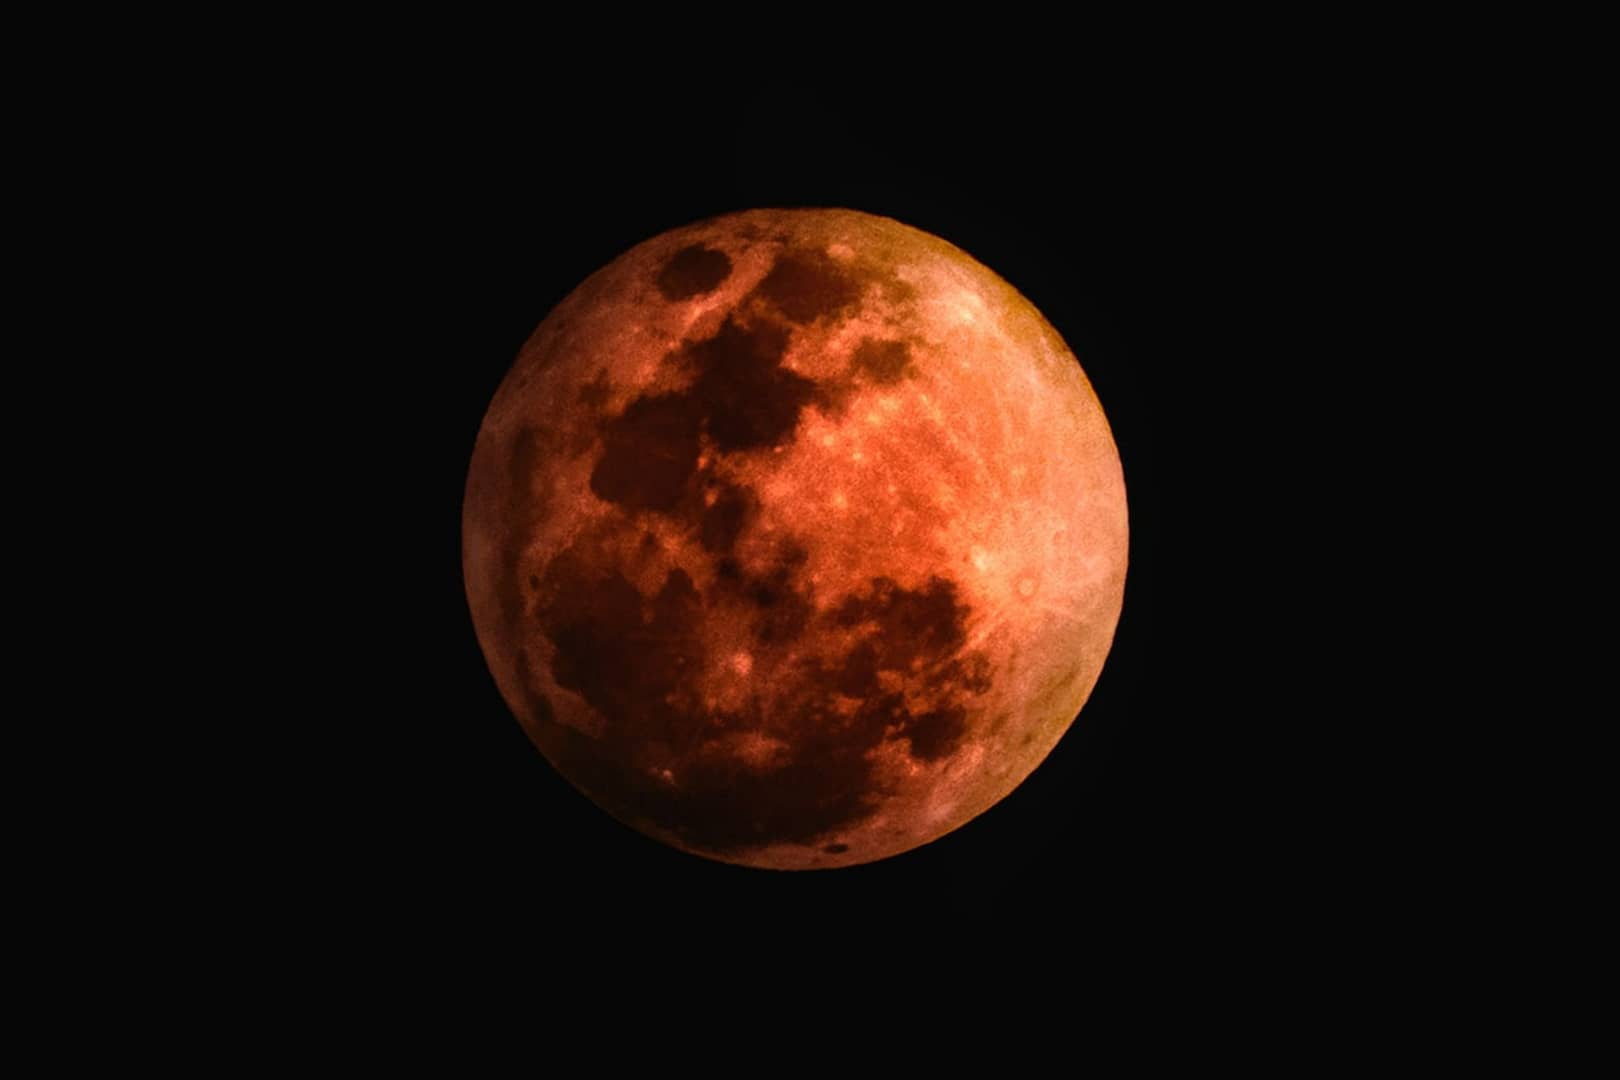 red orange moon on a black background